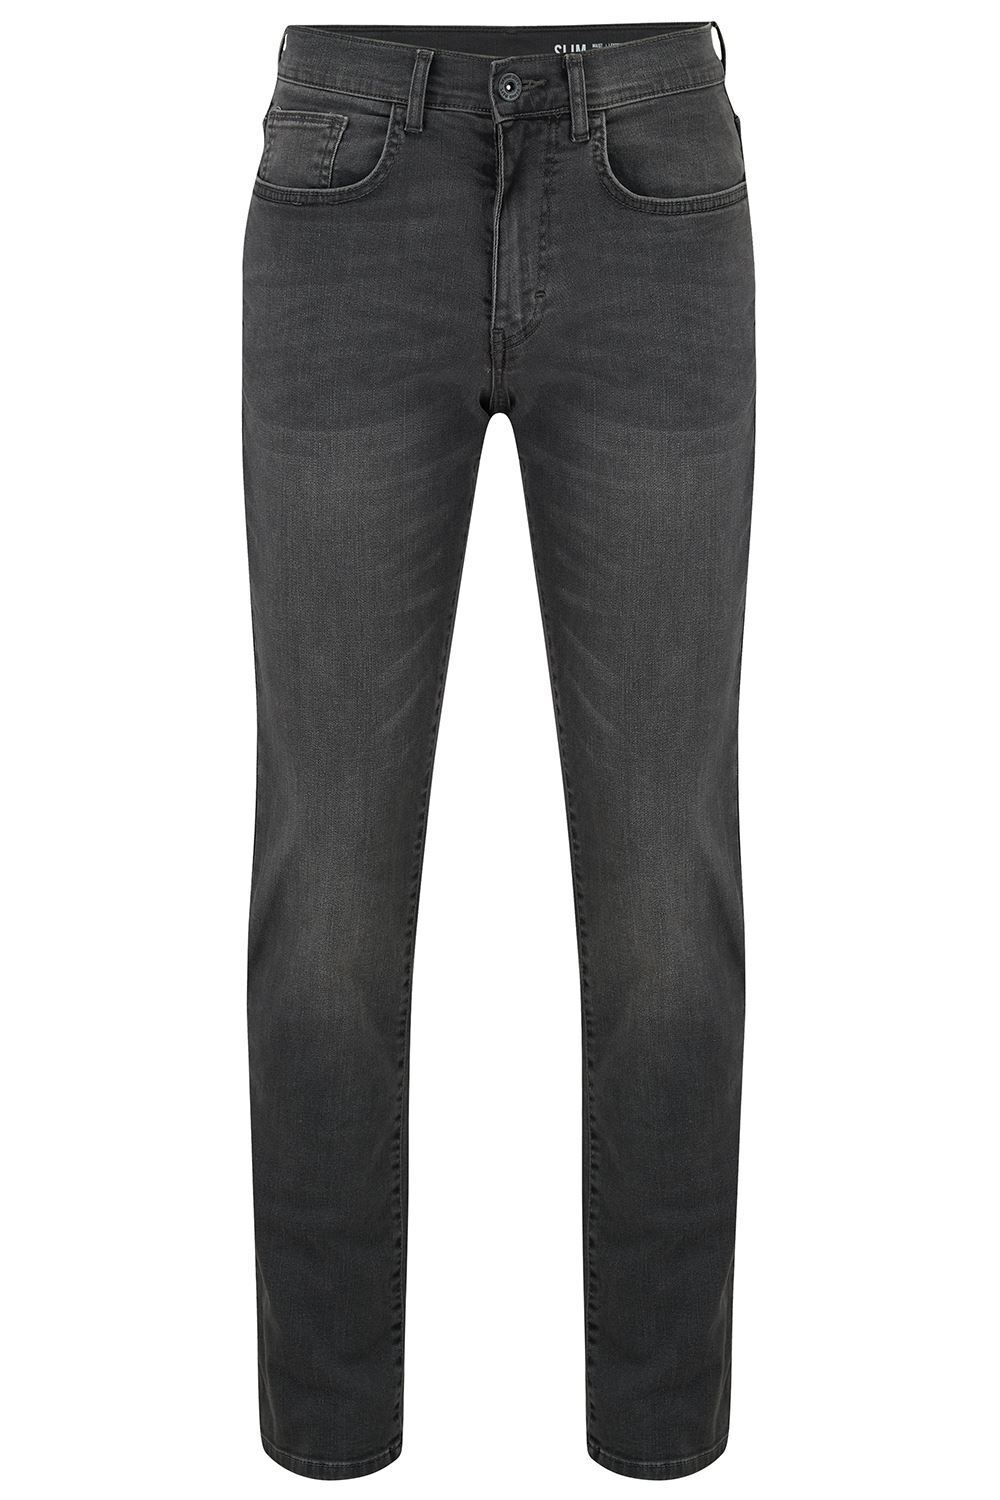 Mens Indigo Stretch Cotton Denim Pants Regular Fit Slim Fit Jeans | eBay